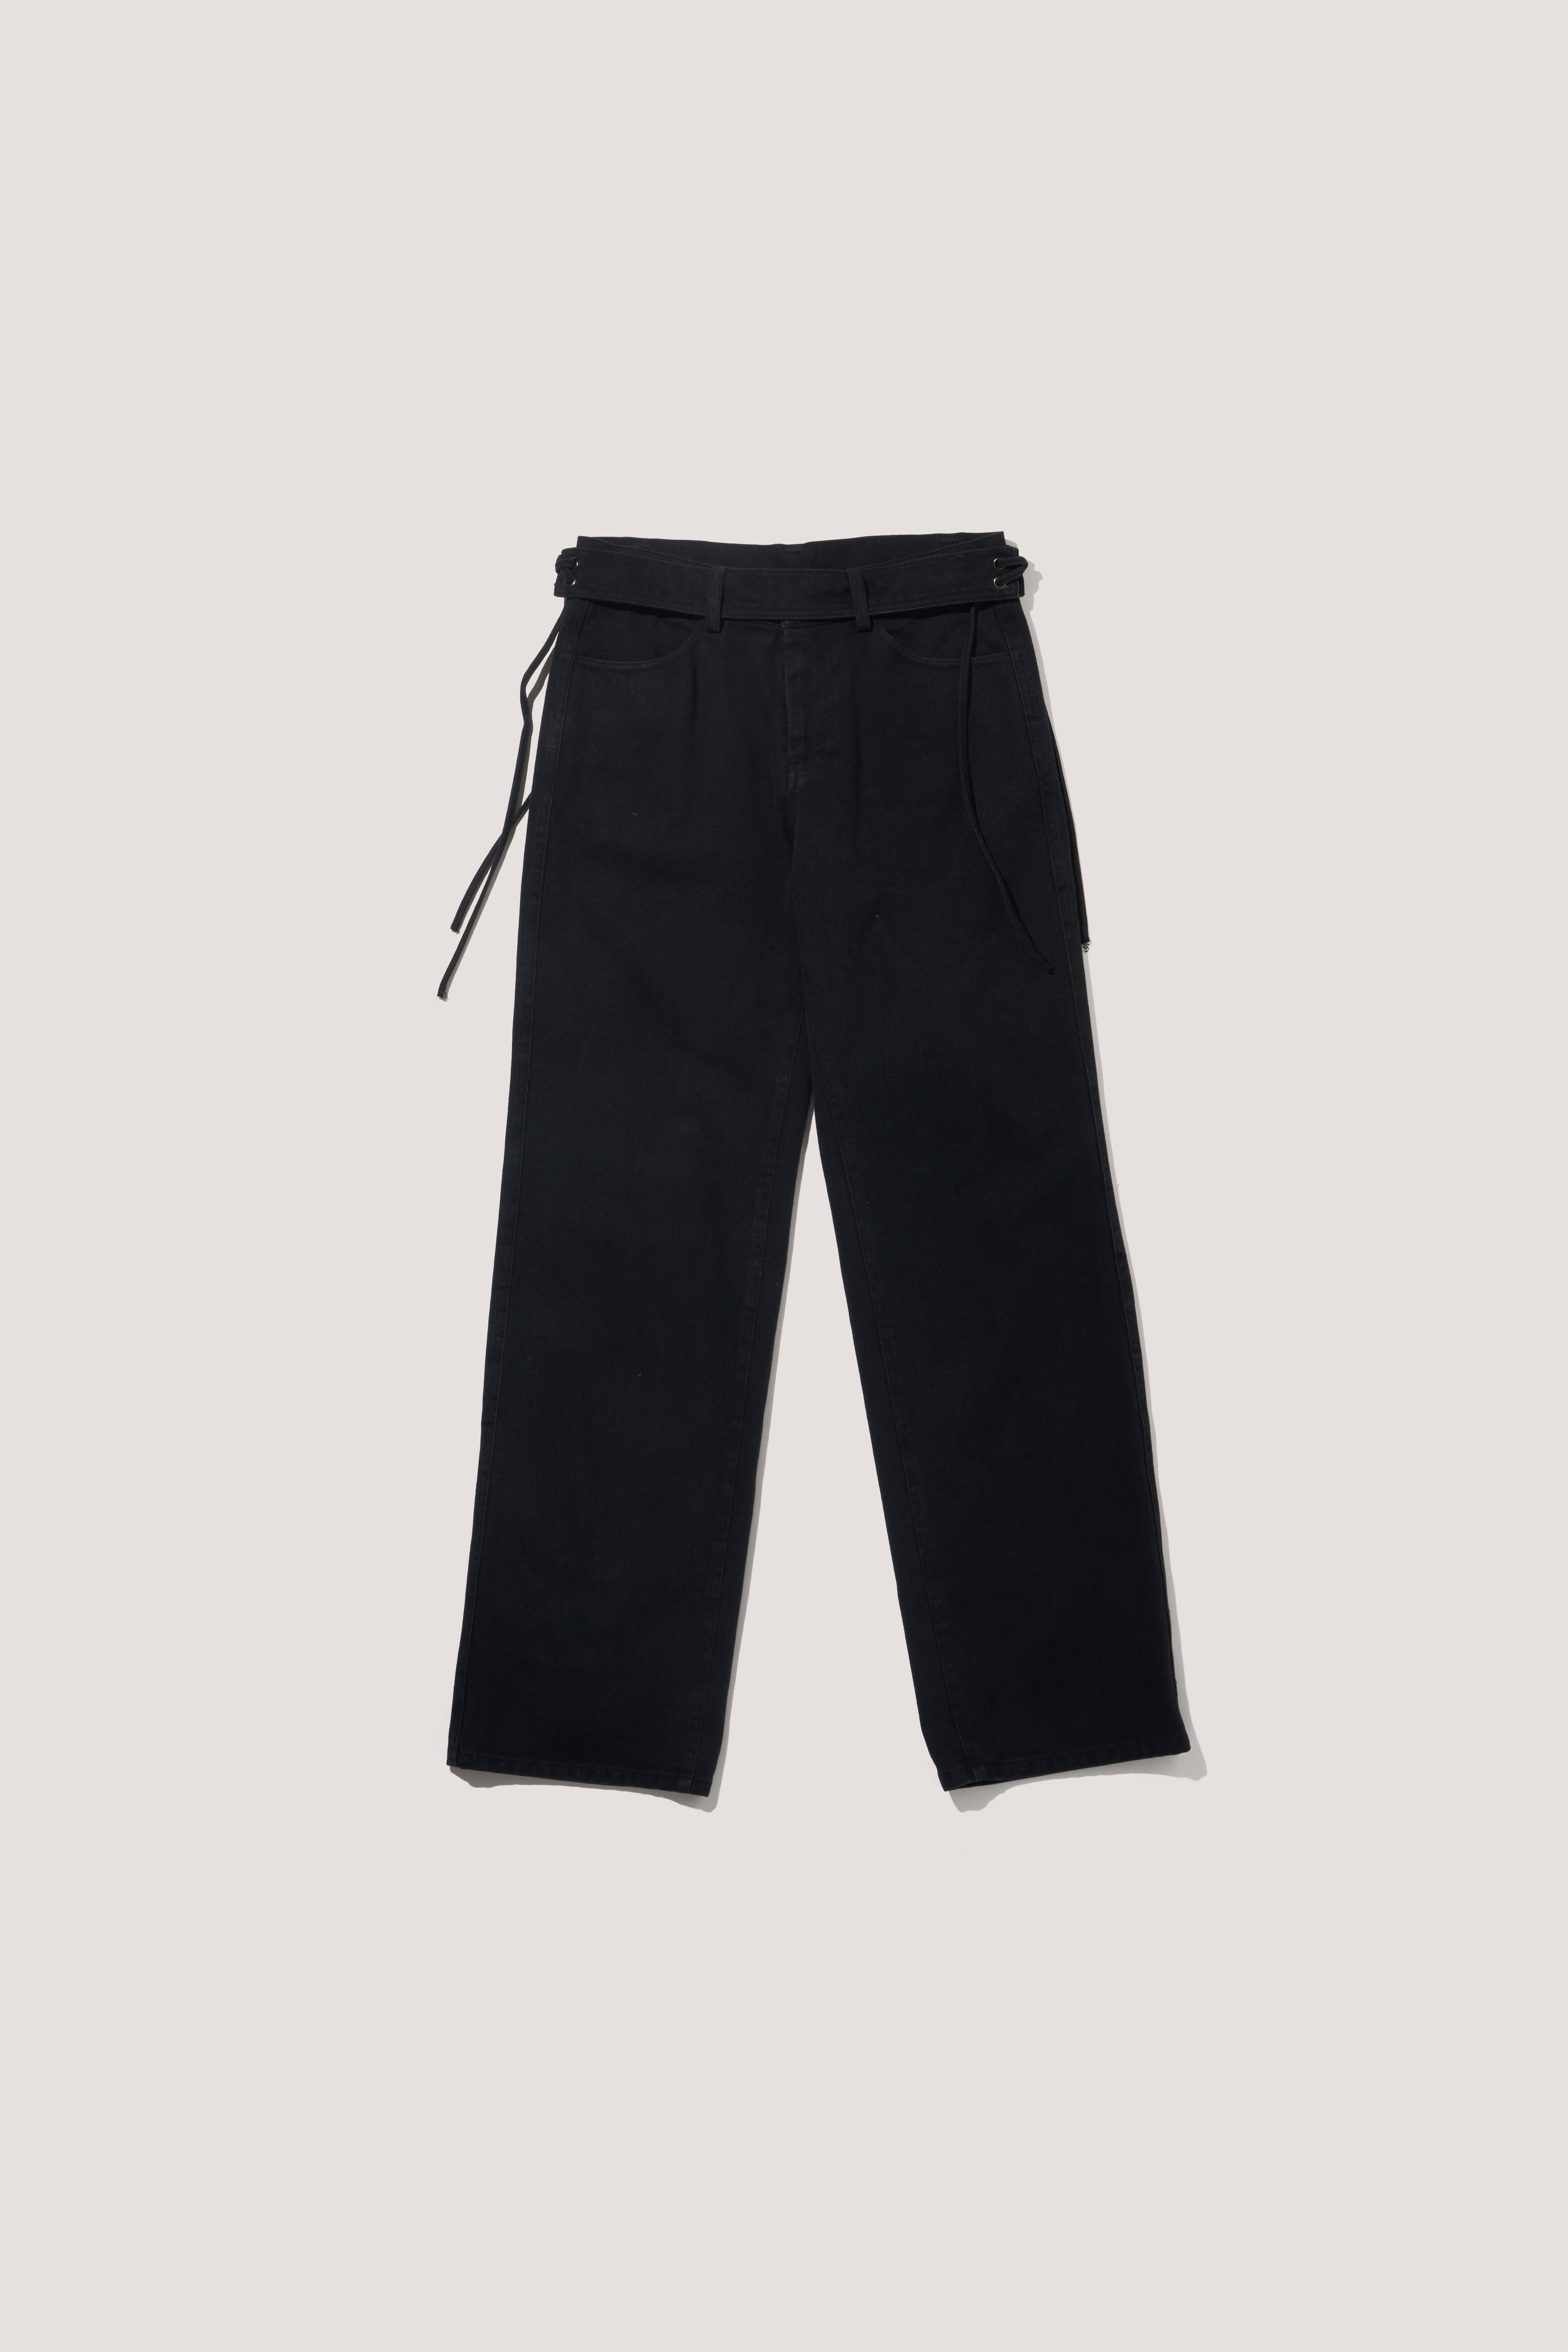 Western Belt Pants [black]